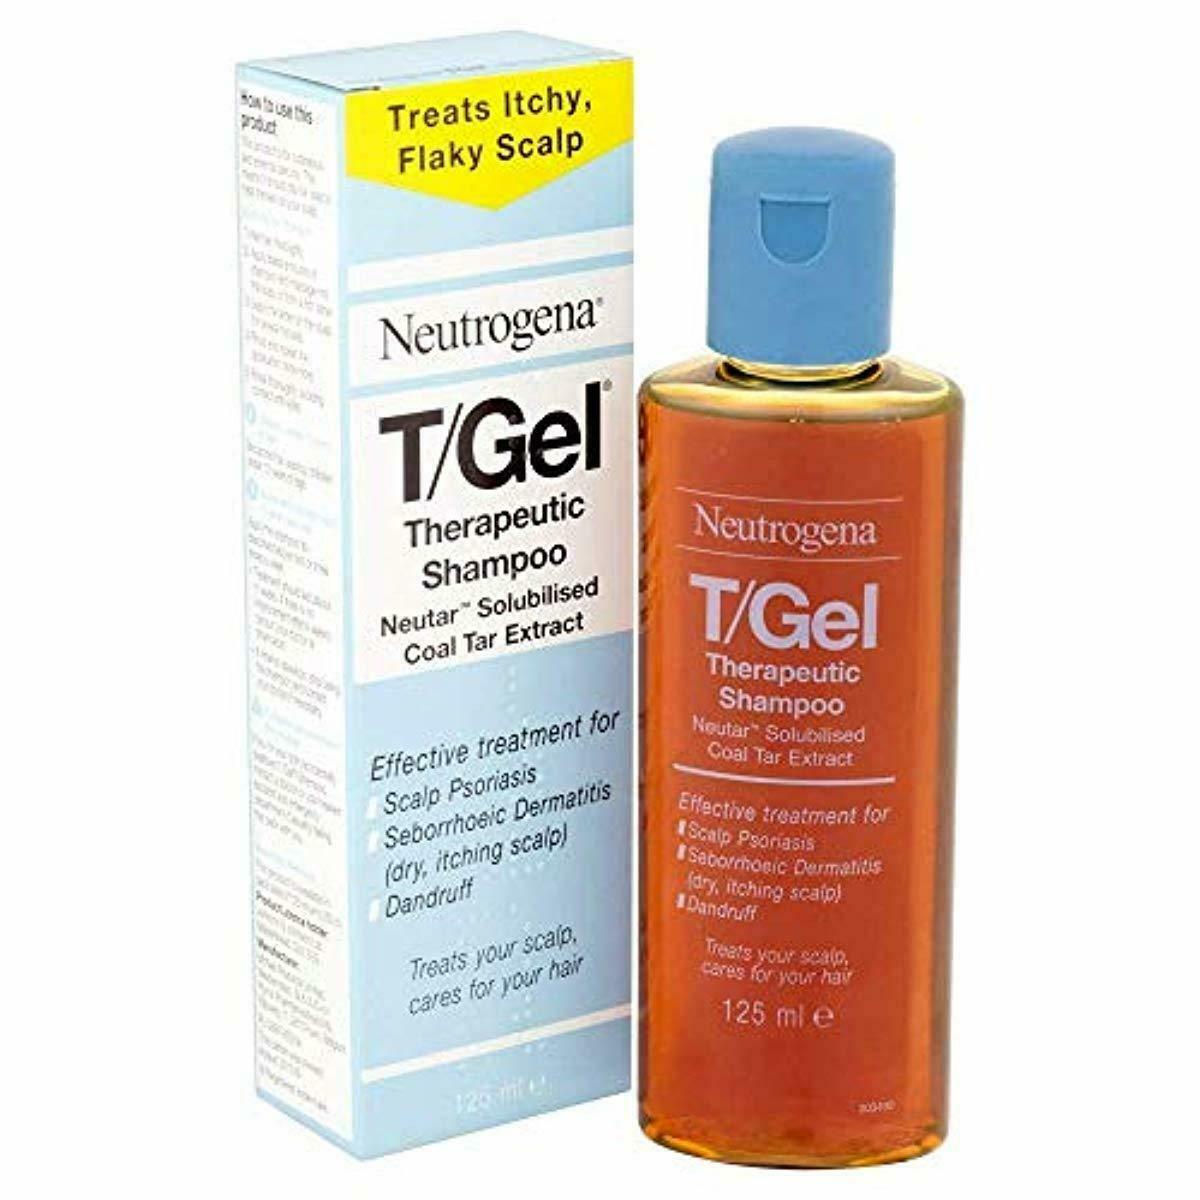 Neutrogena T/Gel Therapeutic Shampoo Treatment Scalp Psoriasis Dandruff ...